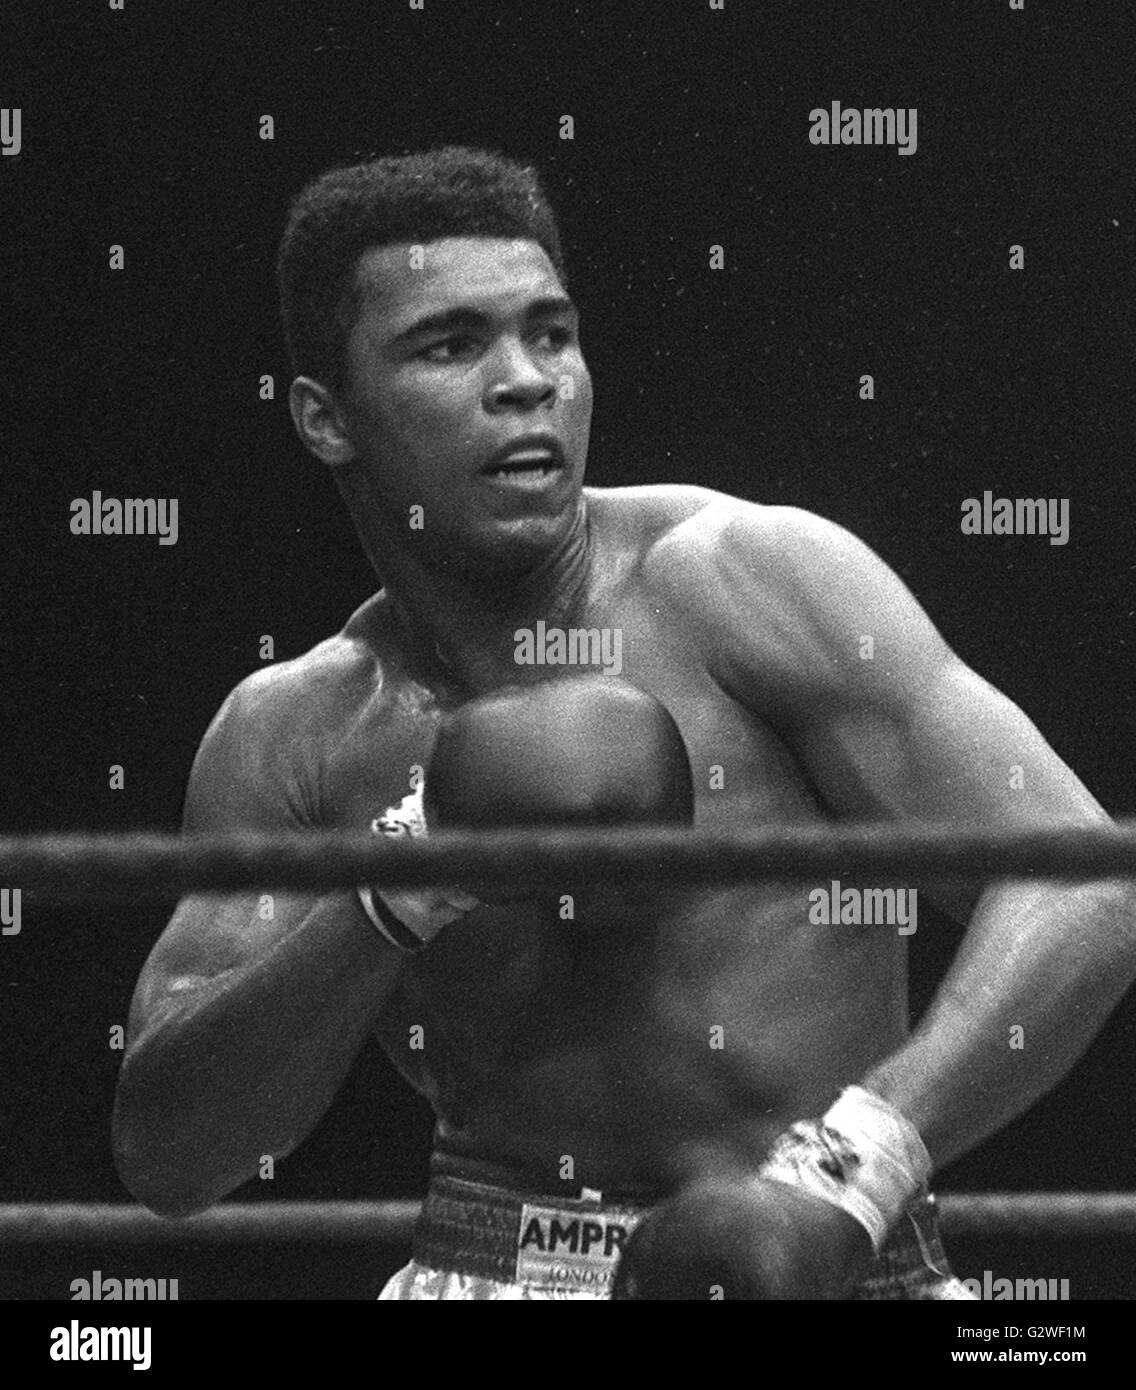 Muhammad Ali alias Cassio CLAY(USA), Boxen, Schwergewicht, Halbfigur, in Boxpositur, Schwarzweissaufnahme; Hf. | Utilizzo di tutto il mondo Foto Stock